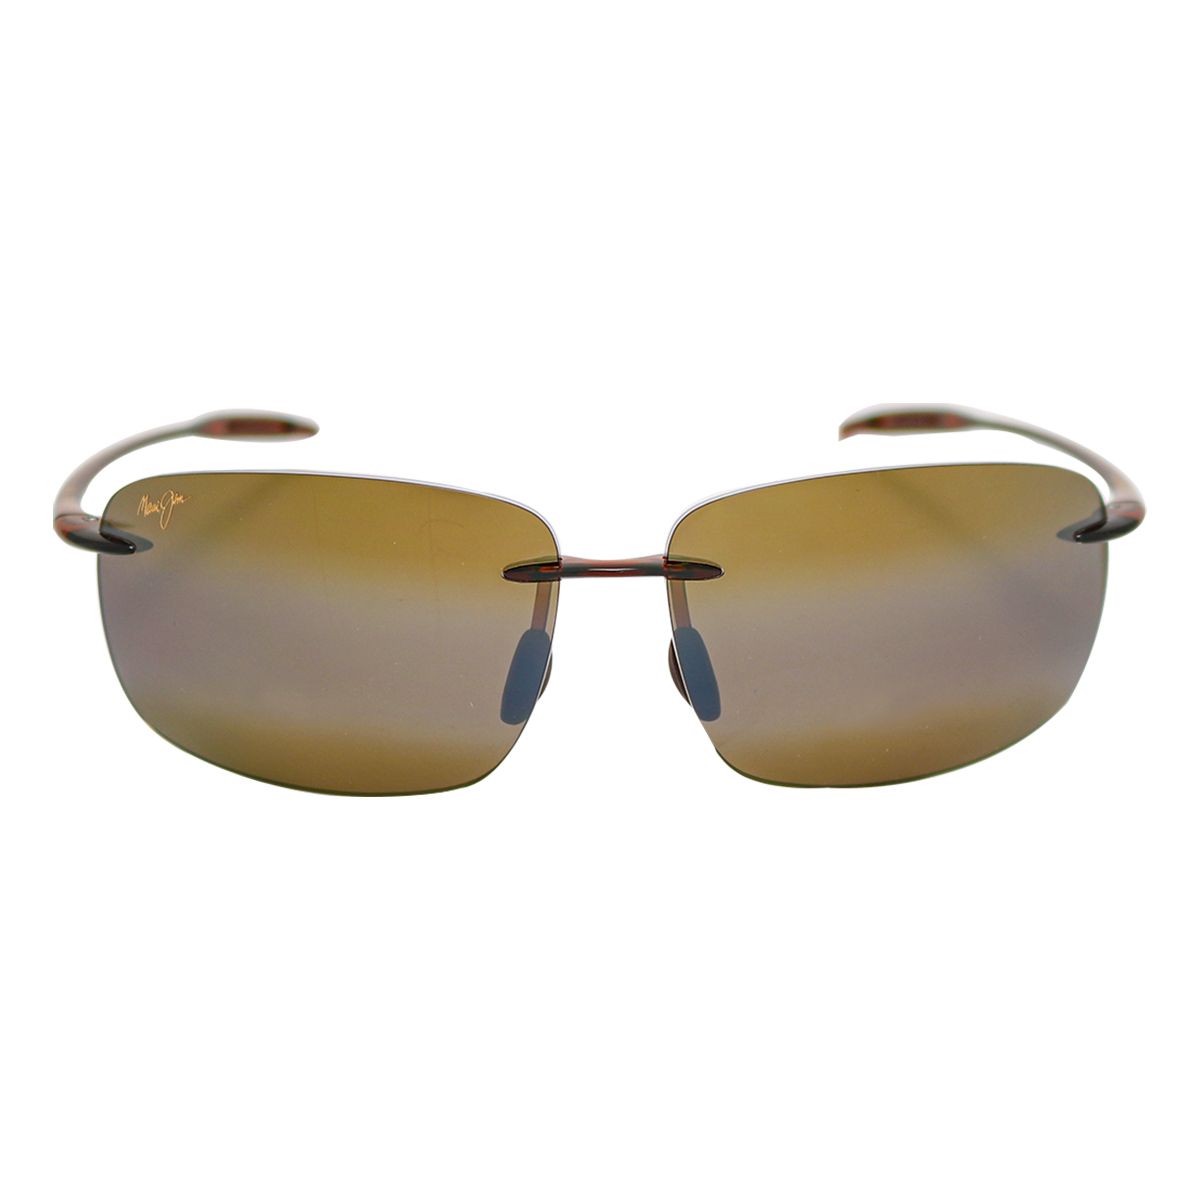 MJ422 Rectangle Sunglasses 26 - size 63